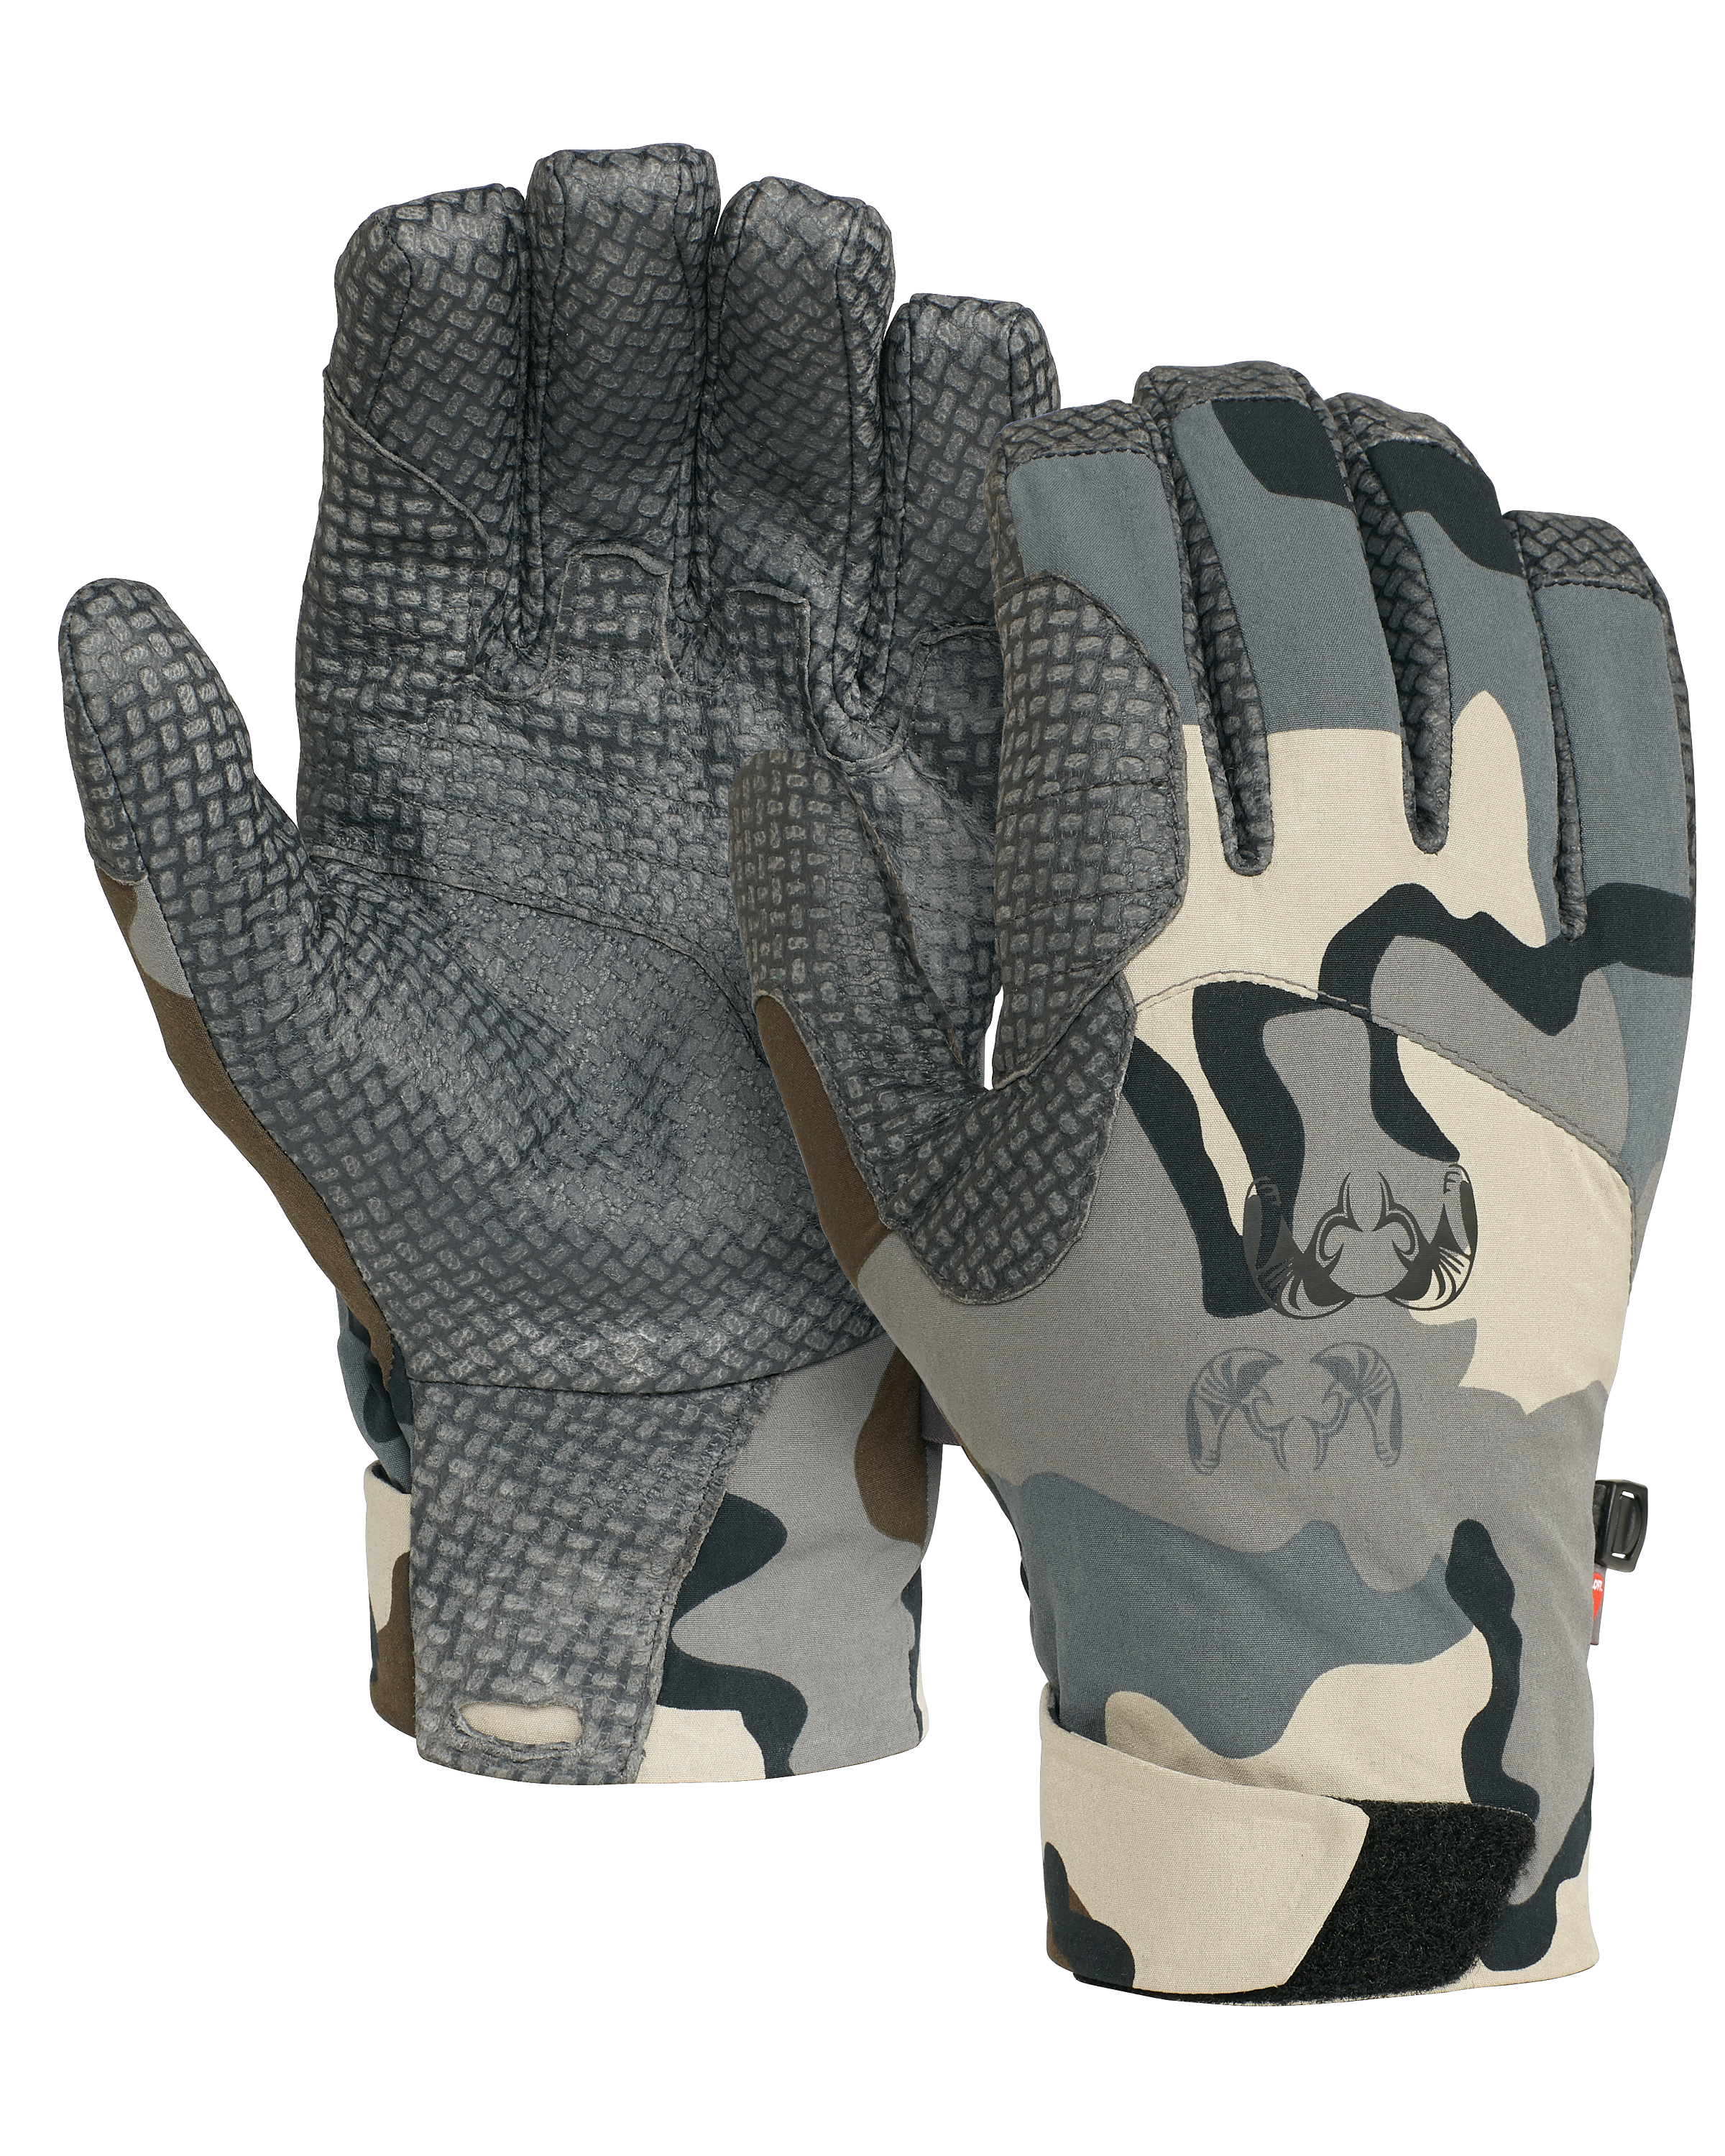 KUIU Yukon PRO Hunting Glove in Vias | Size XL